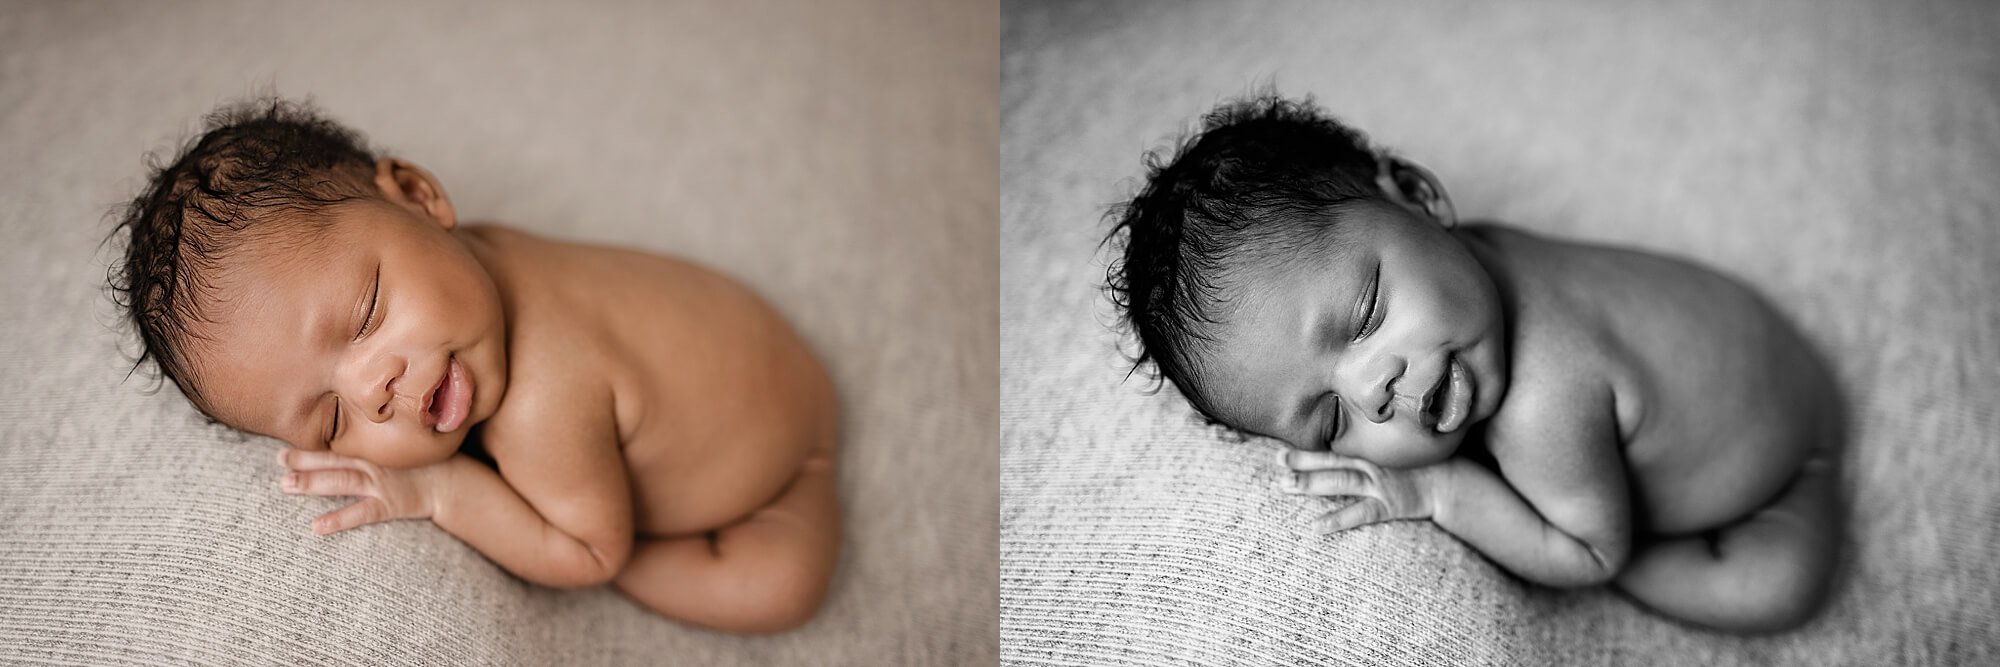 toronto newborn photographer, newborn photography near me, newborn portraits toronto